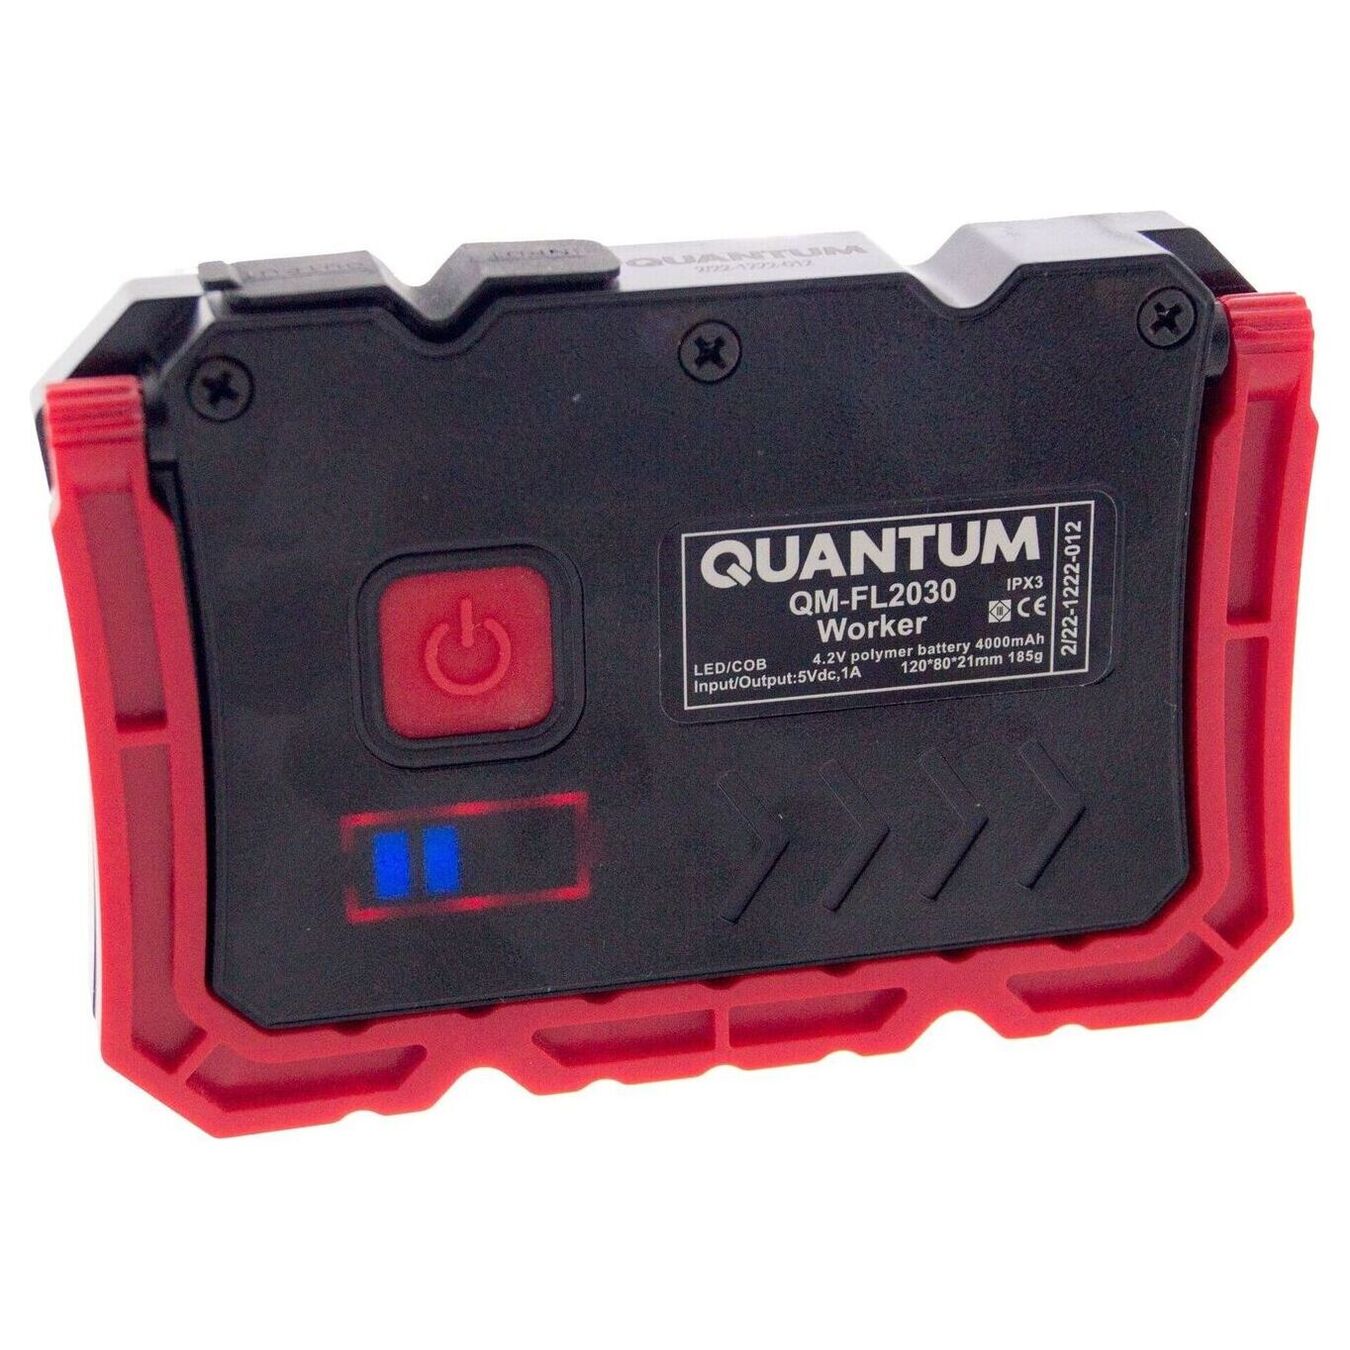 Quantum QM-FL2030 Worker 15W COB+LED flashlight with Power Bank function 3